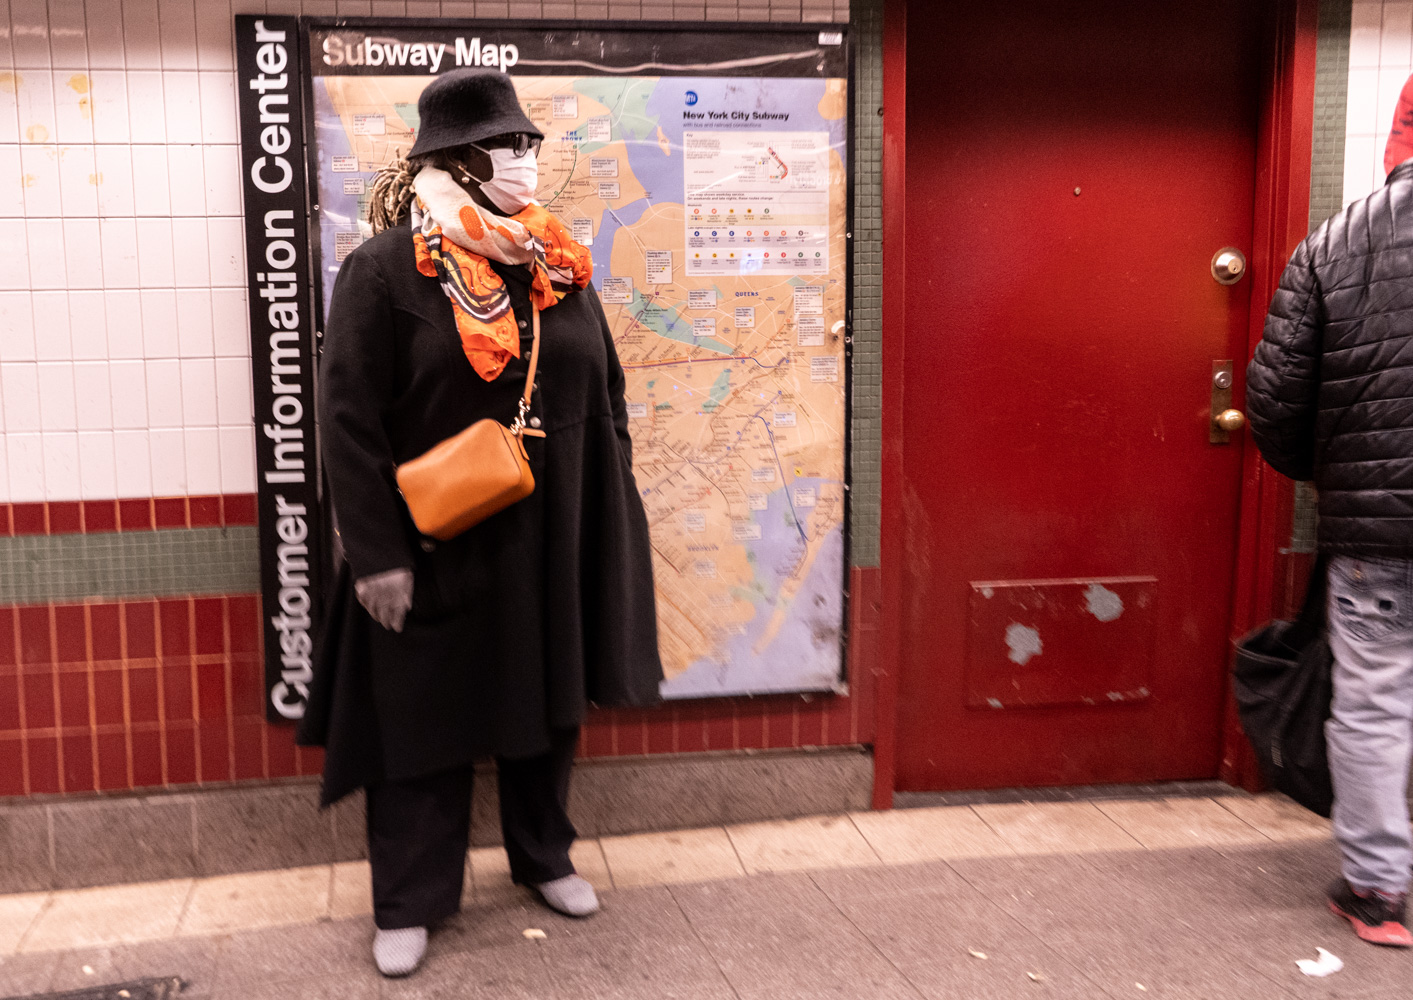 March 18, 2020: Waiting for the train in the Third Avenue subway station, Bronx, New York. © Camilo José Vergara